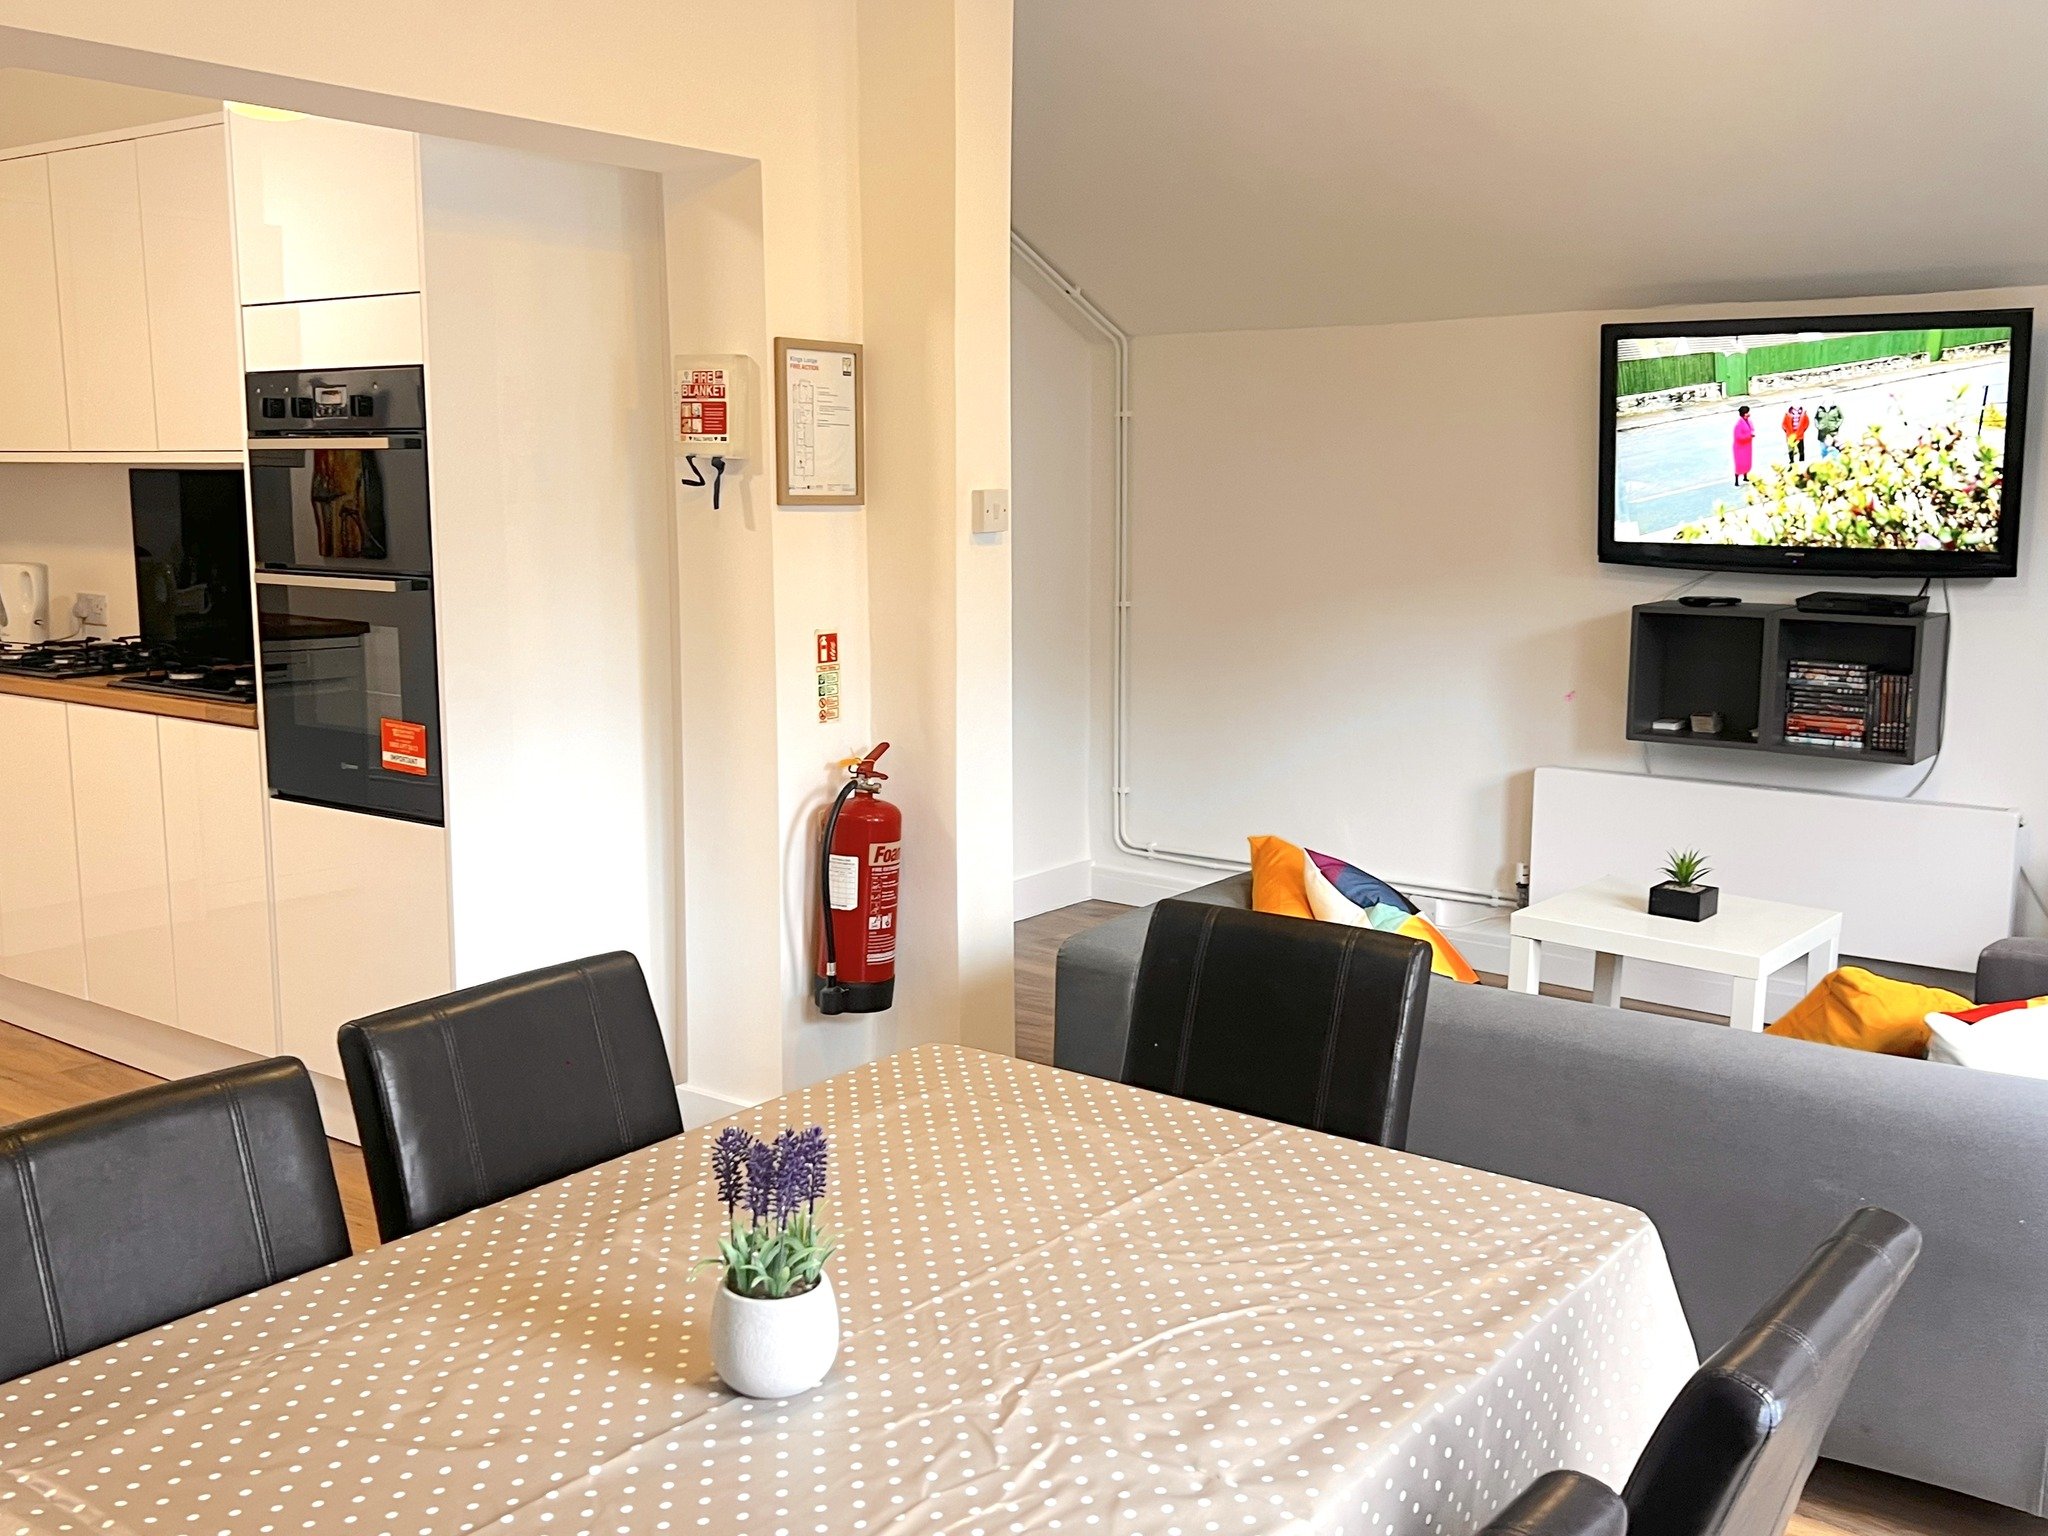 📍King's Lodge looking fresh with its newly refurbished kitchen and sitting room 🆕

👇
www.wimbledon-school.ac.uk/accommodation/3/kings-lodge

#MyWSE #studyabroadlife 
#London #Wimbledon